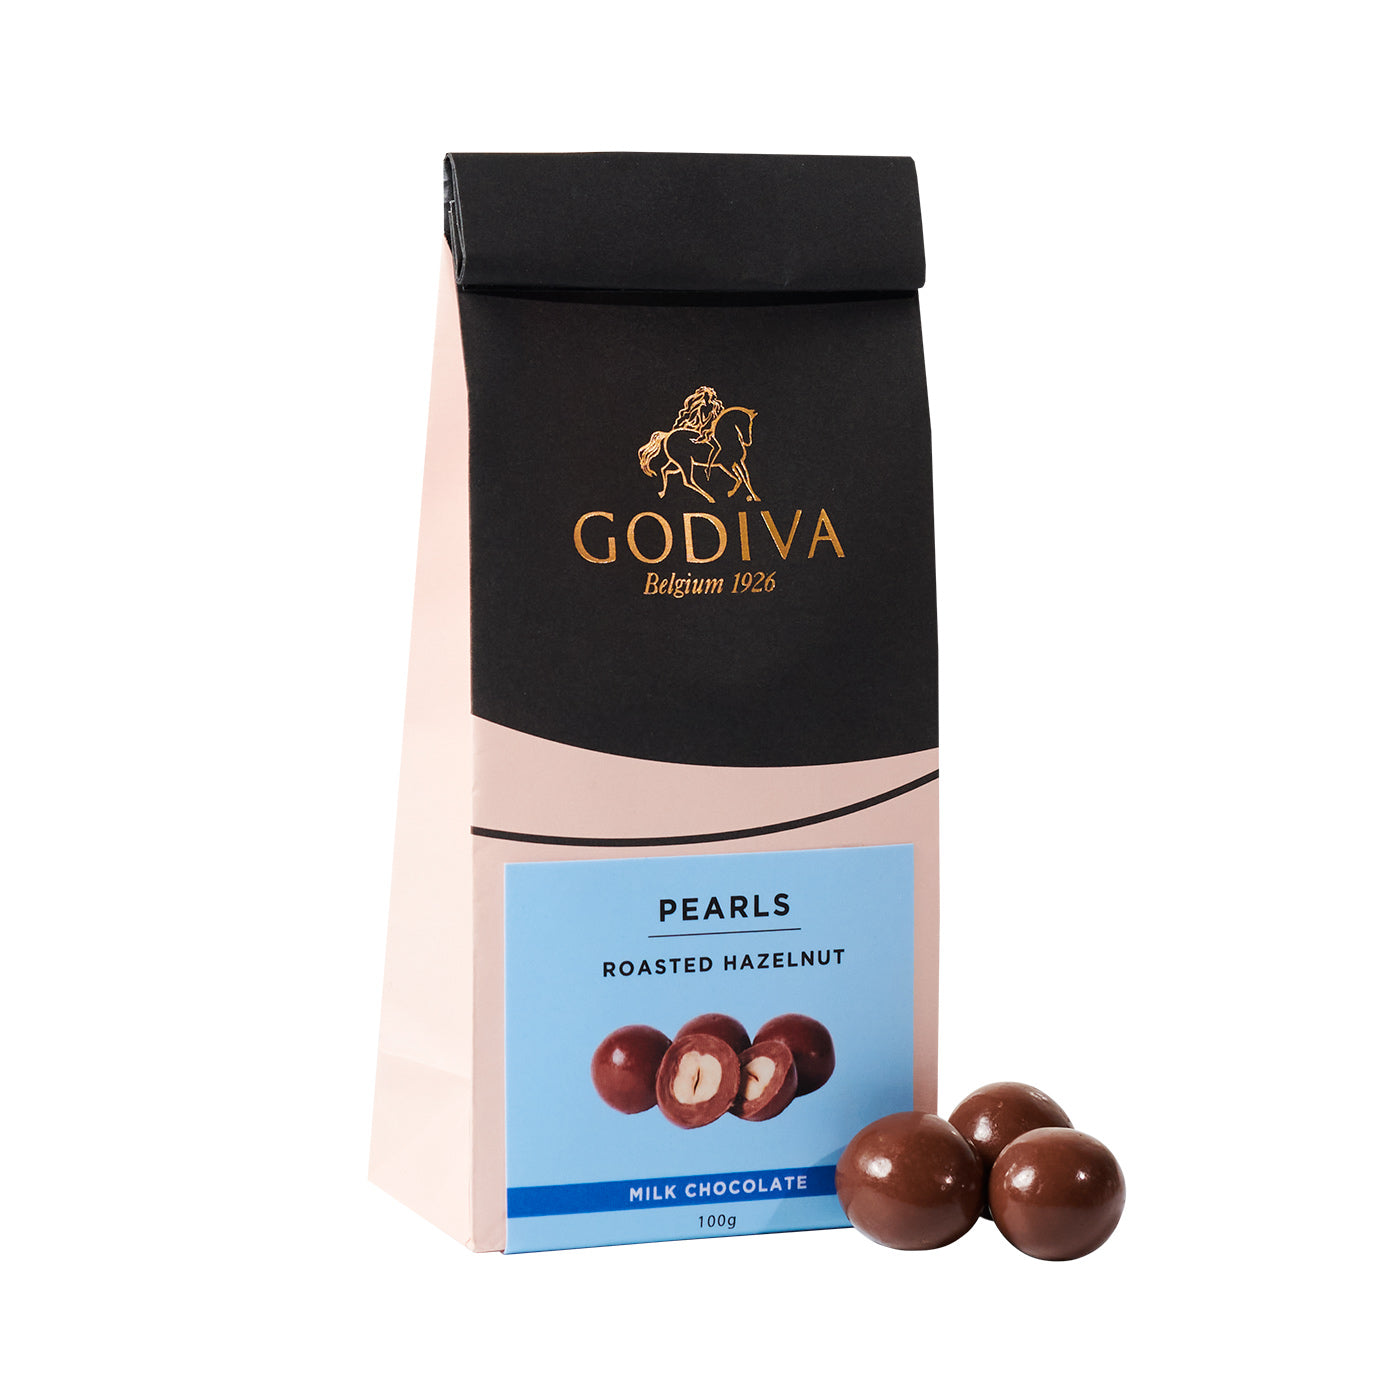 Milk Chocolate Pearls, Roasted Hazelnut, 100g